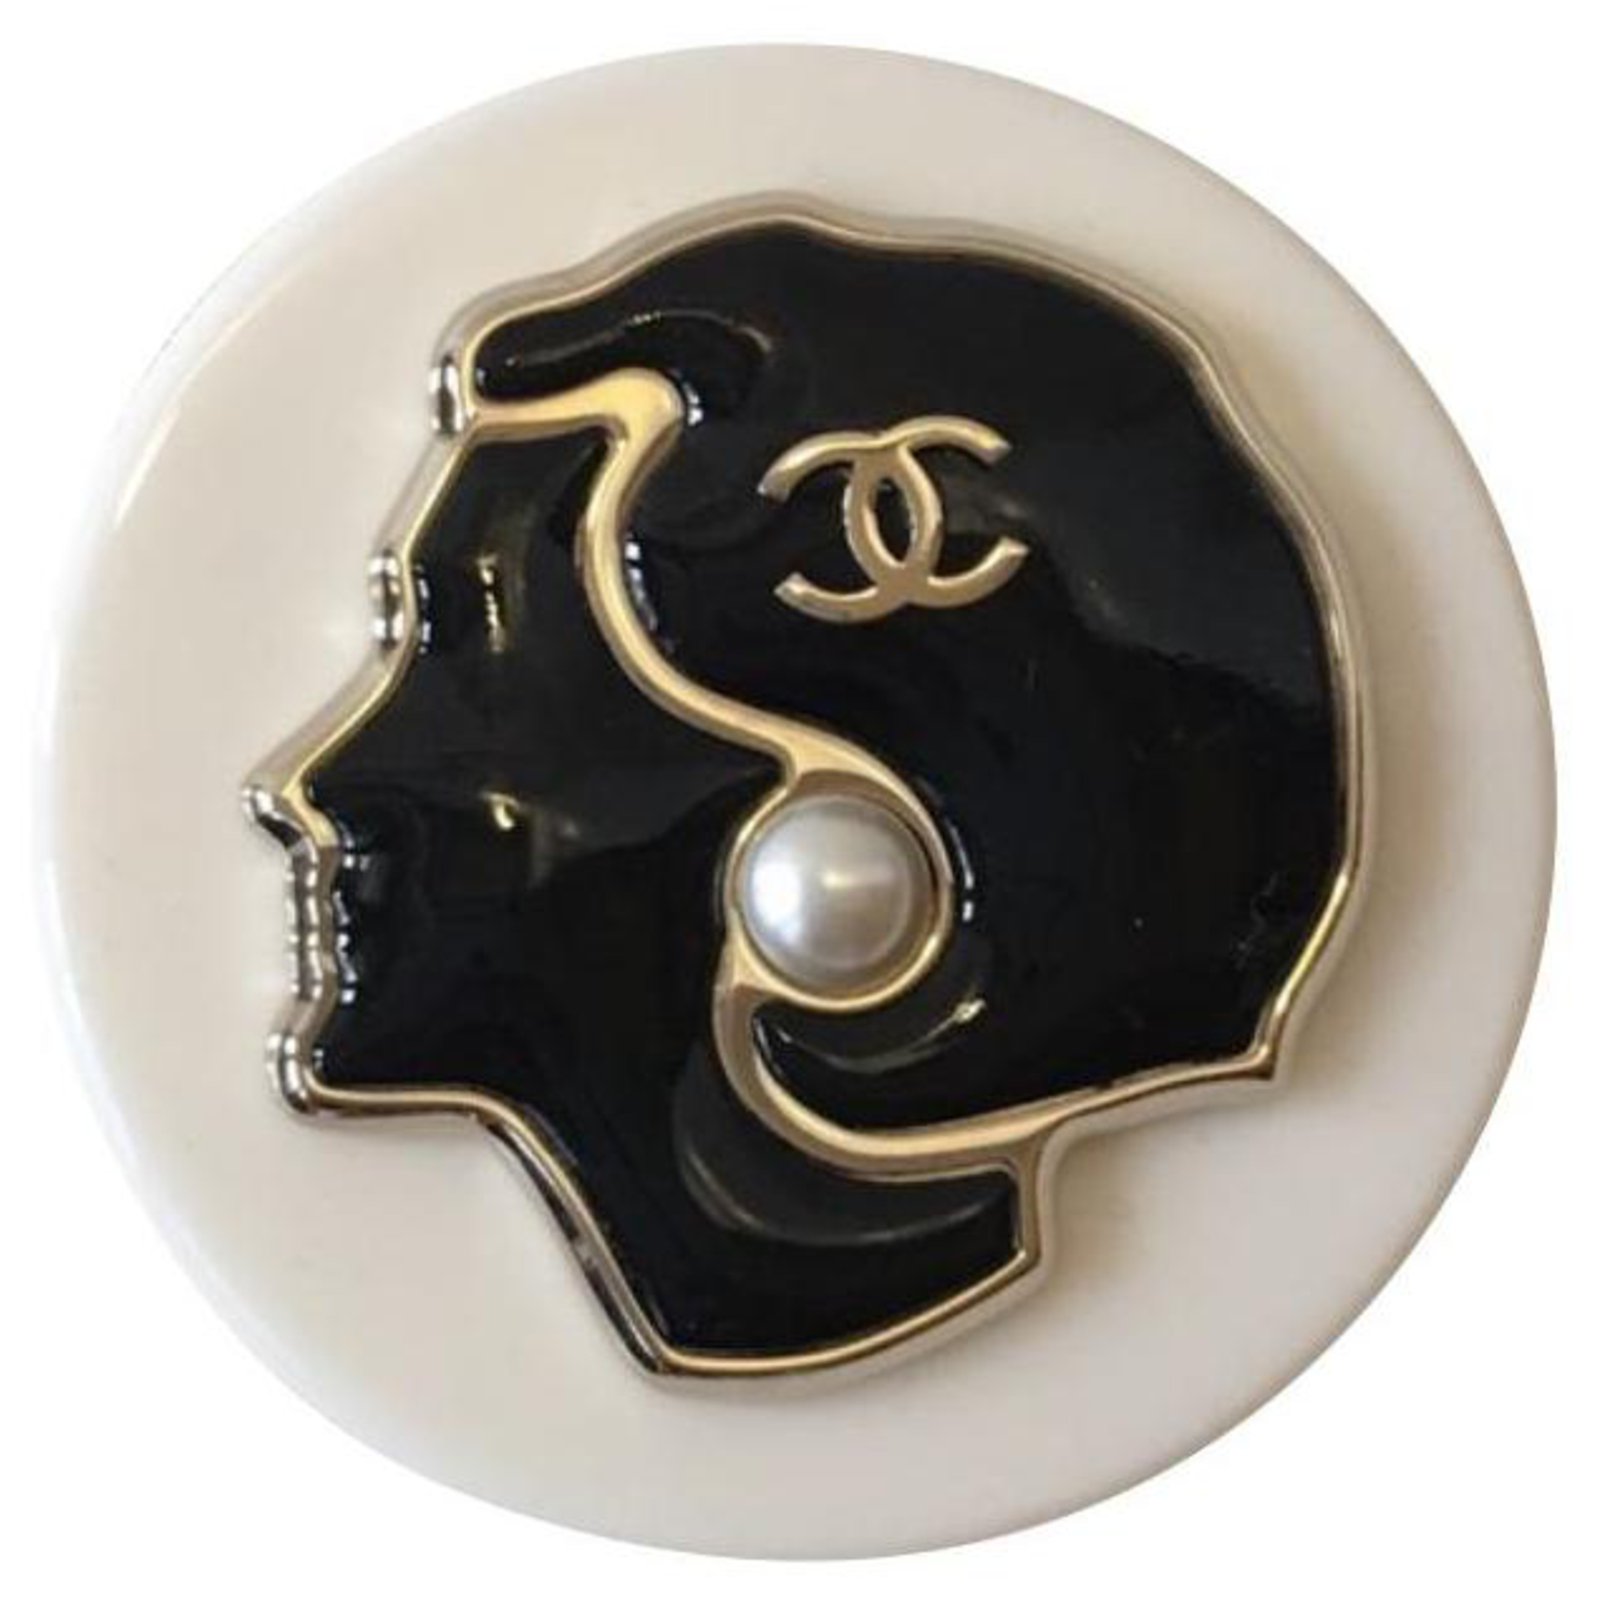 CHANEL Paris CC Black White Enamel Lim Edition Crystal Brooch Pin